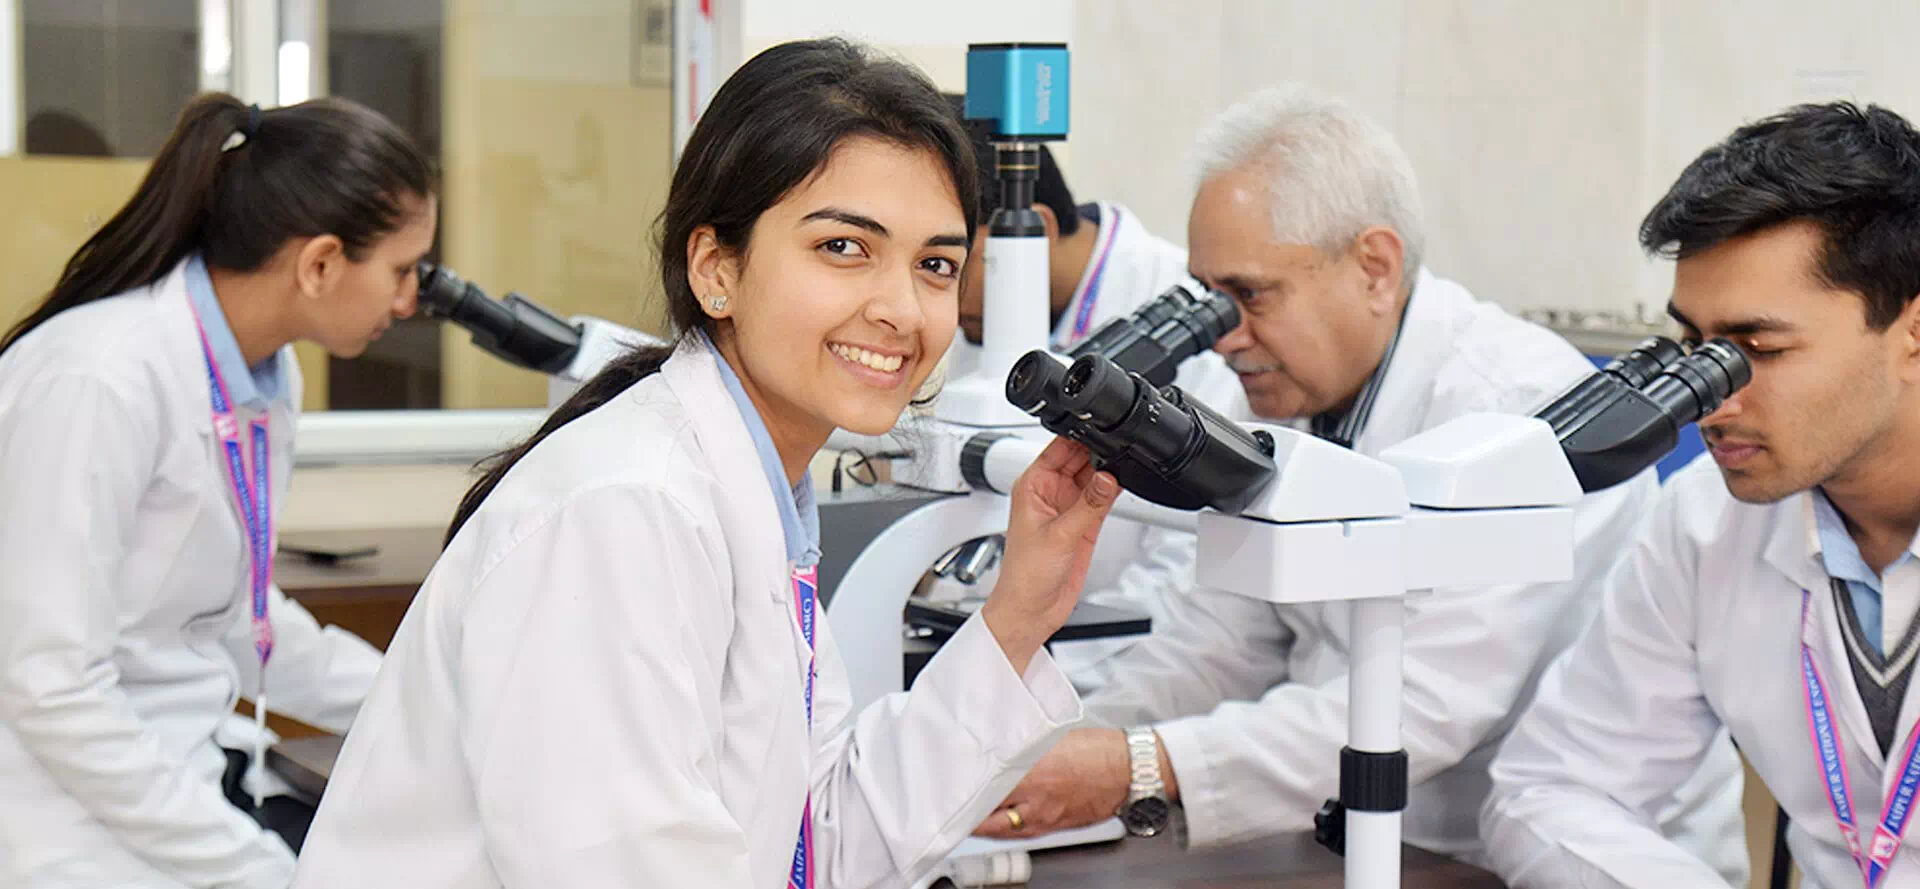 medical education rajasthan gov in jaipur report